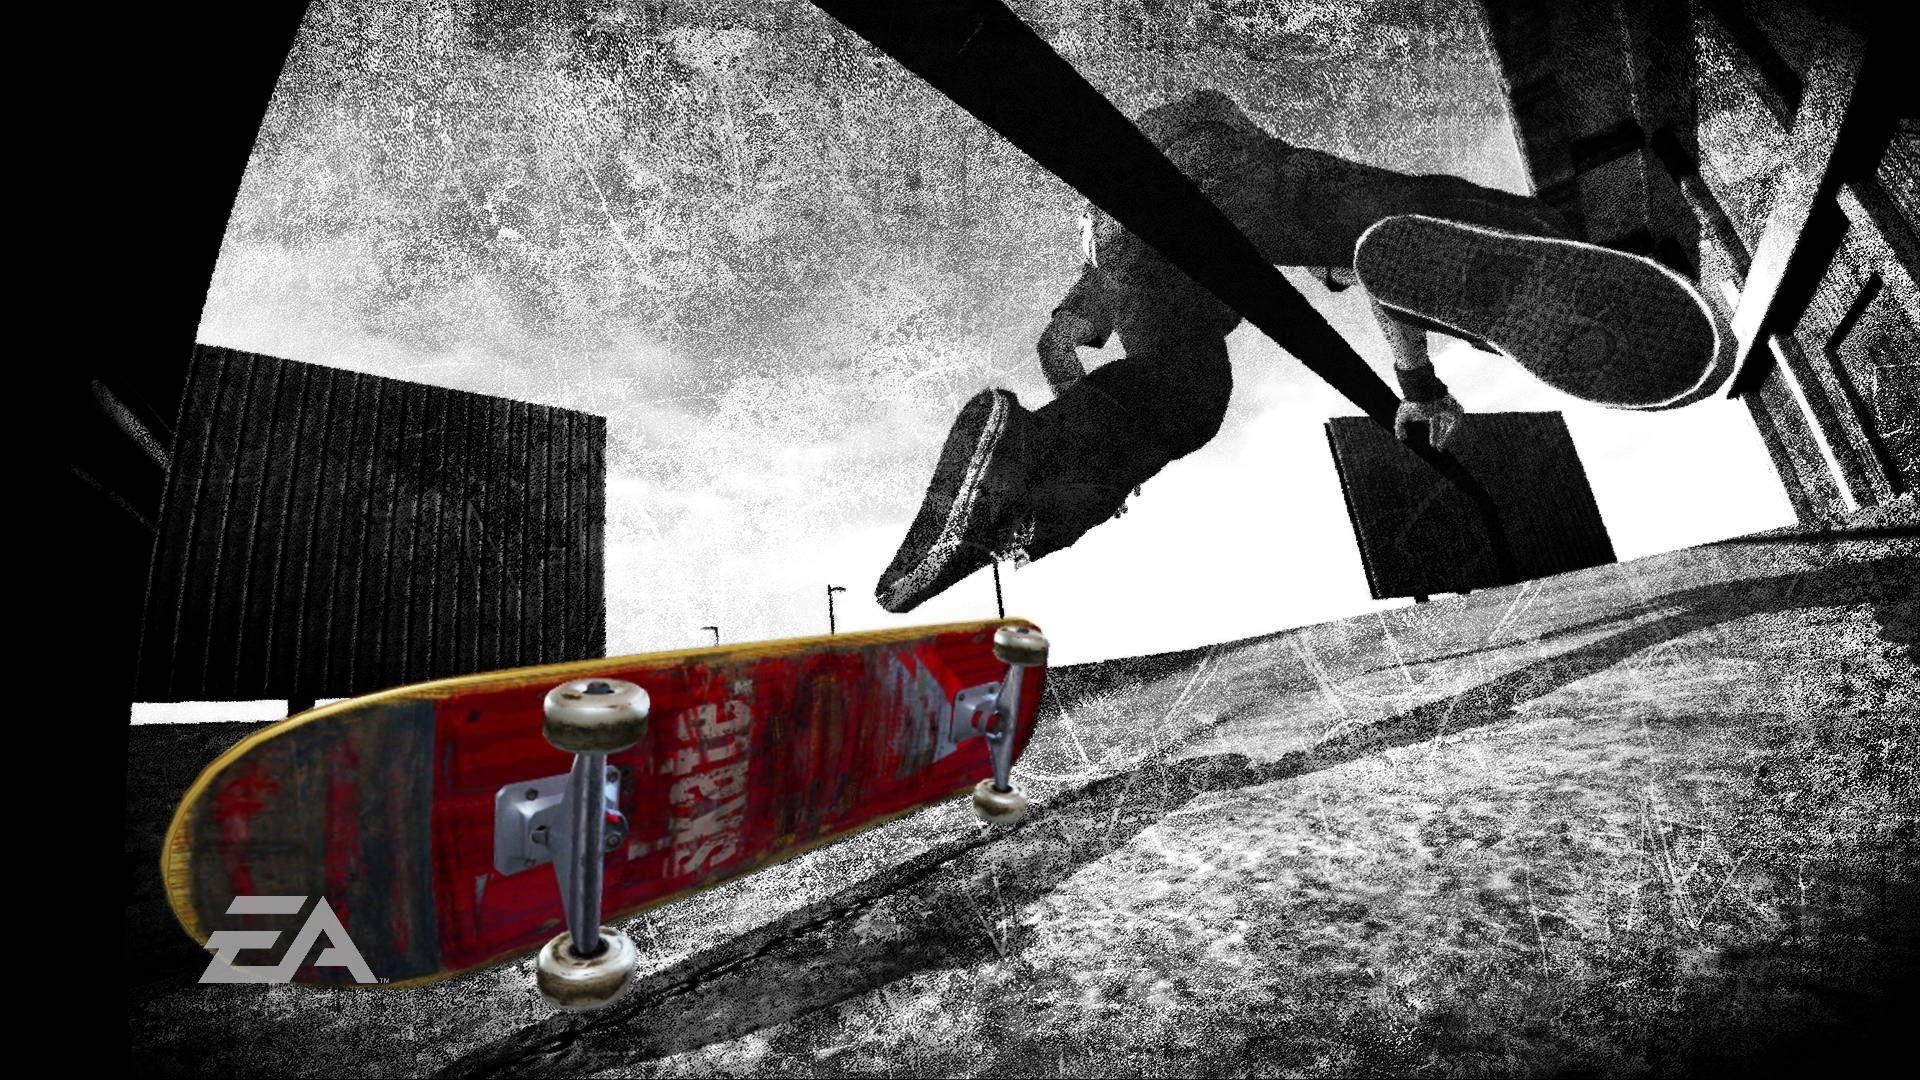 Wallpaper Skateboard Images  Free Download on Freepik